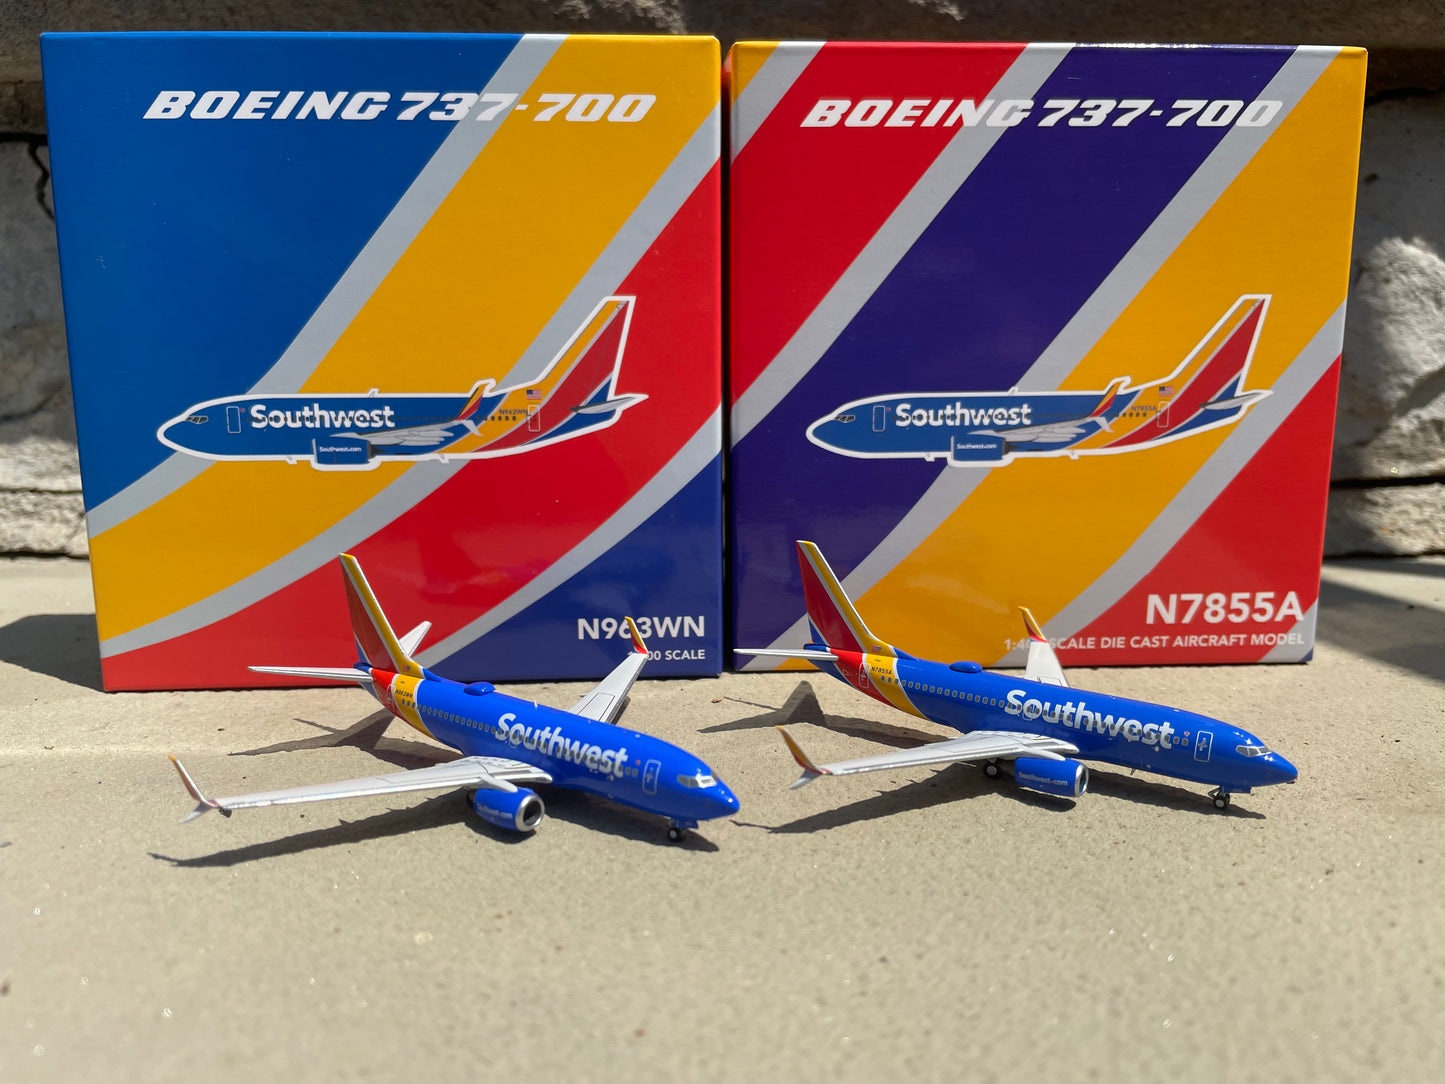 1:400 Panda Models Southwest Airlines Boeing 737-700 "Split Scimitars" Heart Livery N7855A Release